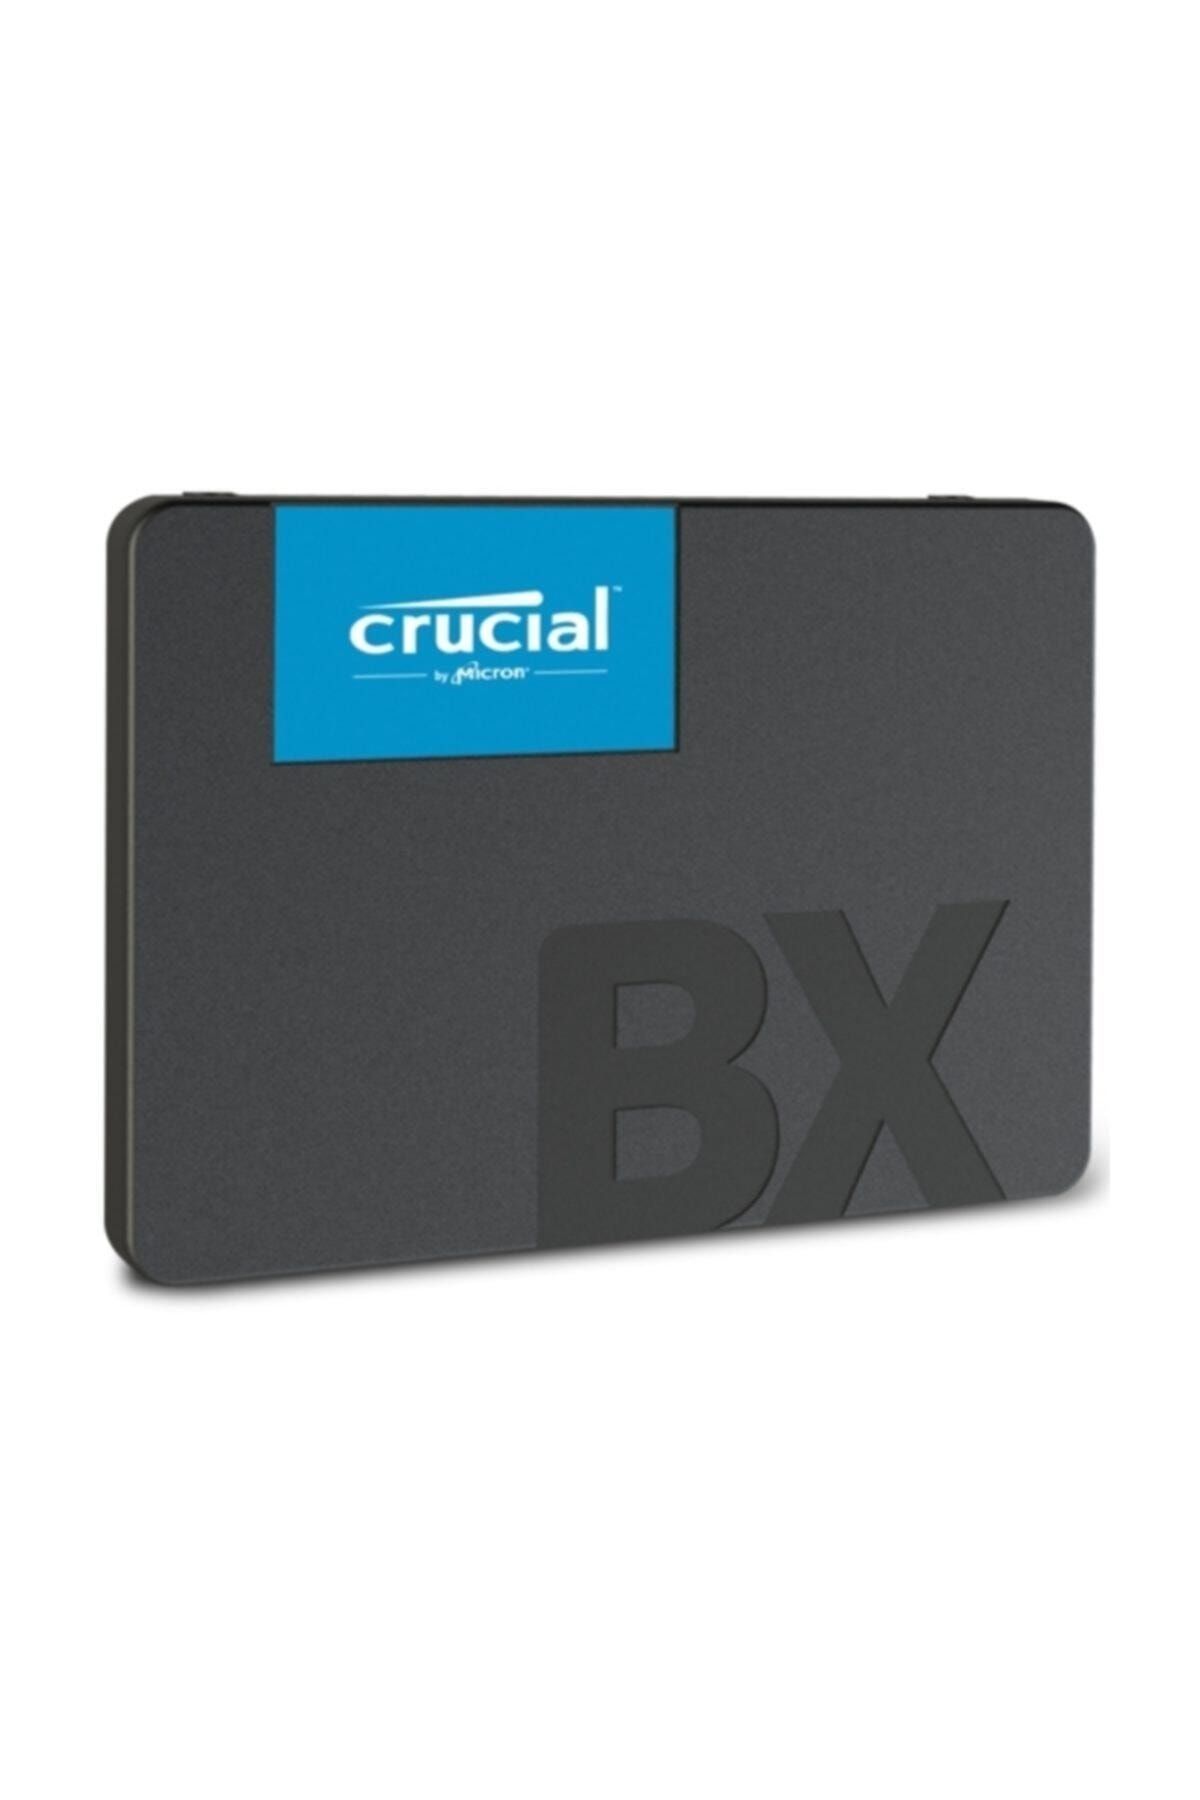 Crucial Bx500 1tb Ssd Disk Ct1000bx500ssd1